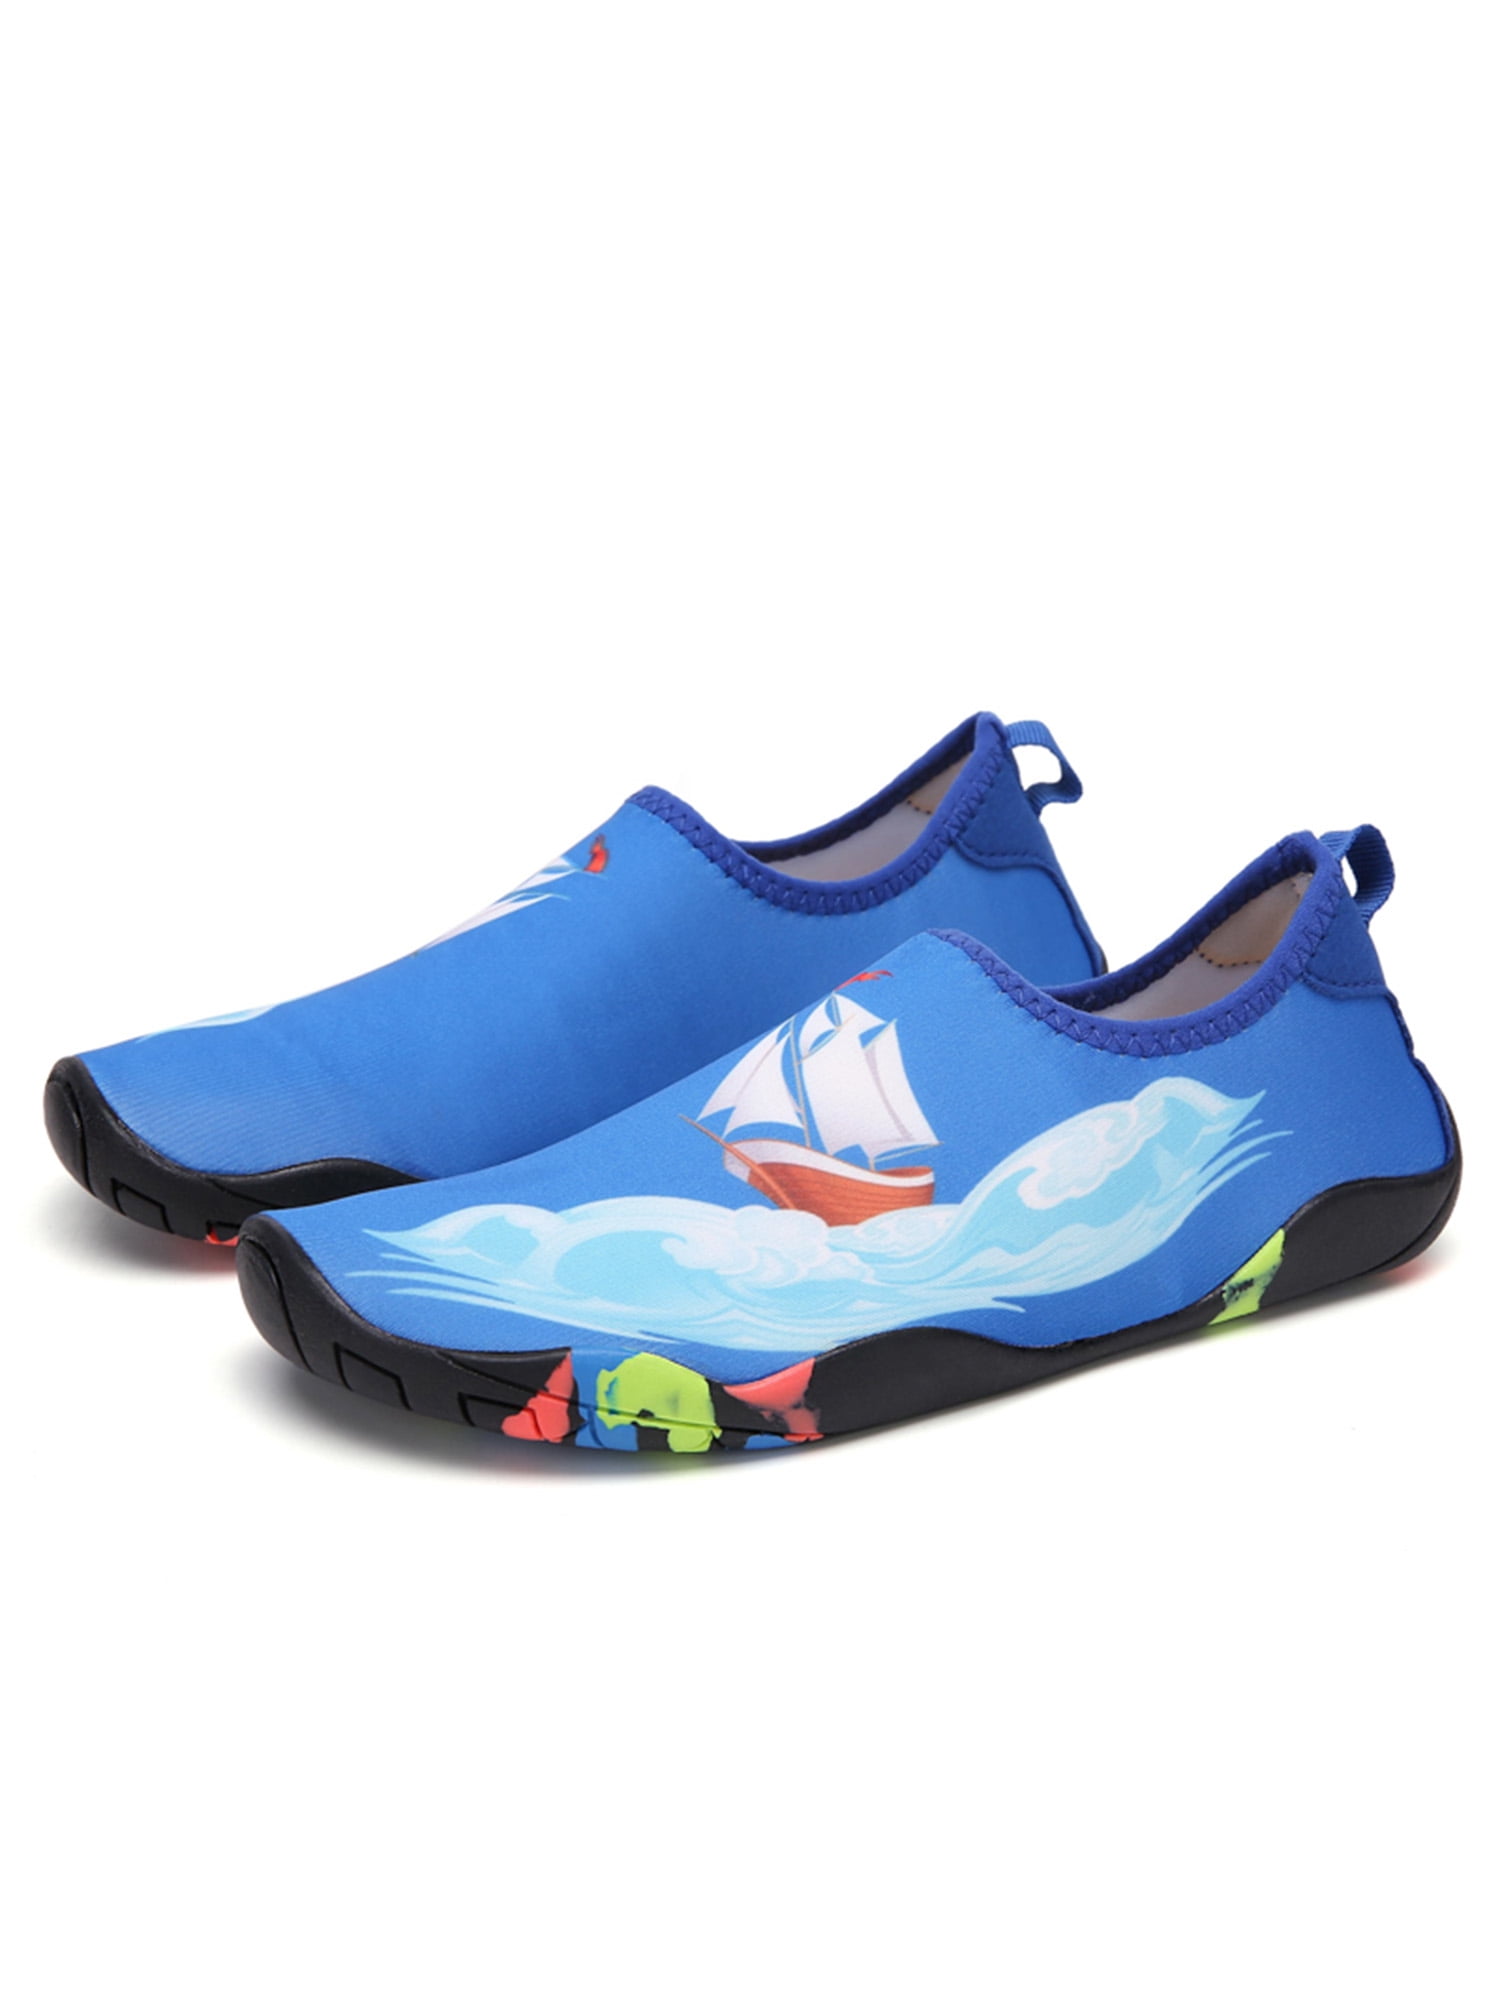 Toddler Lightweight Water Shoes Kids Non-Slip Aqua Socks for Beach Swim Wetsuits 